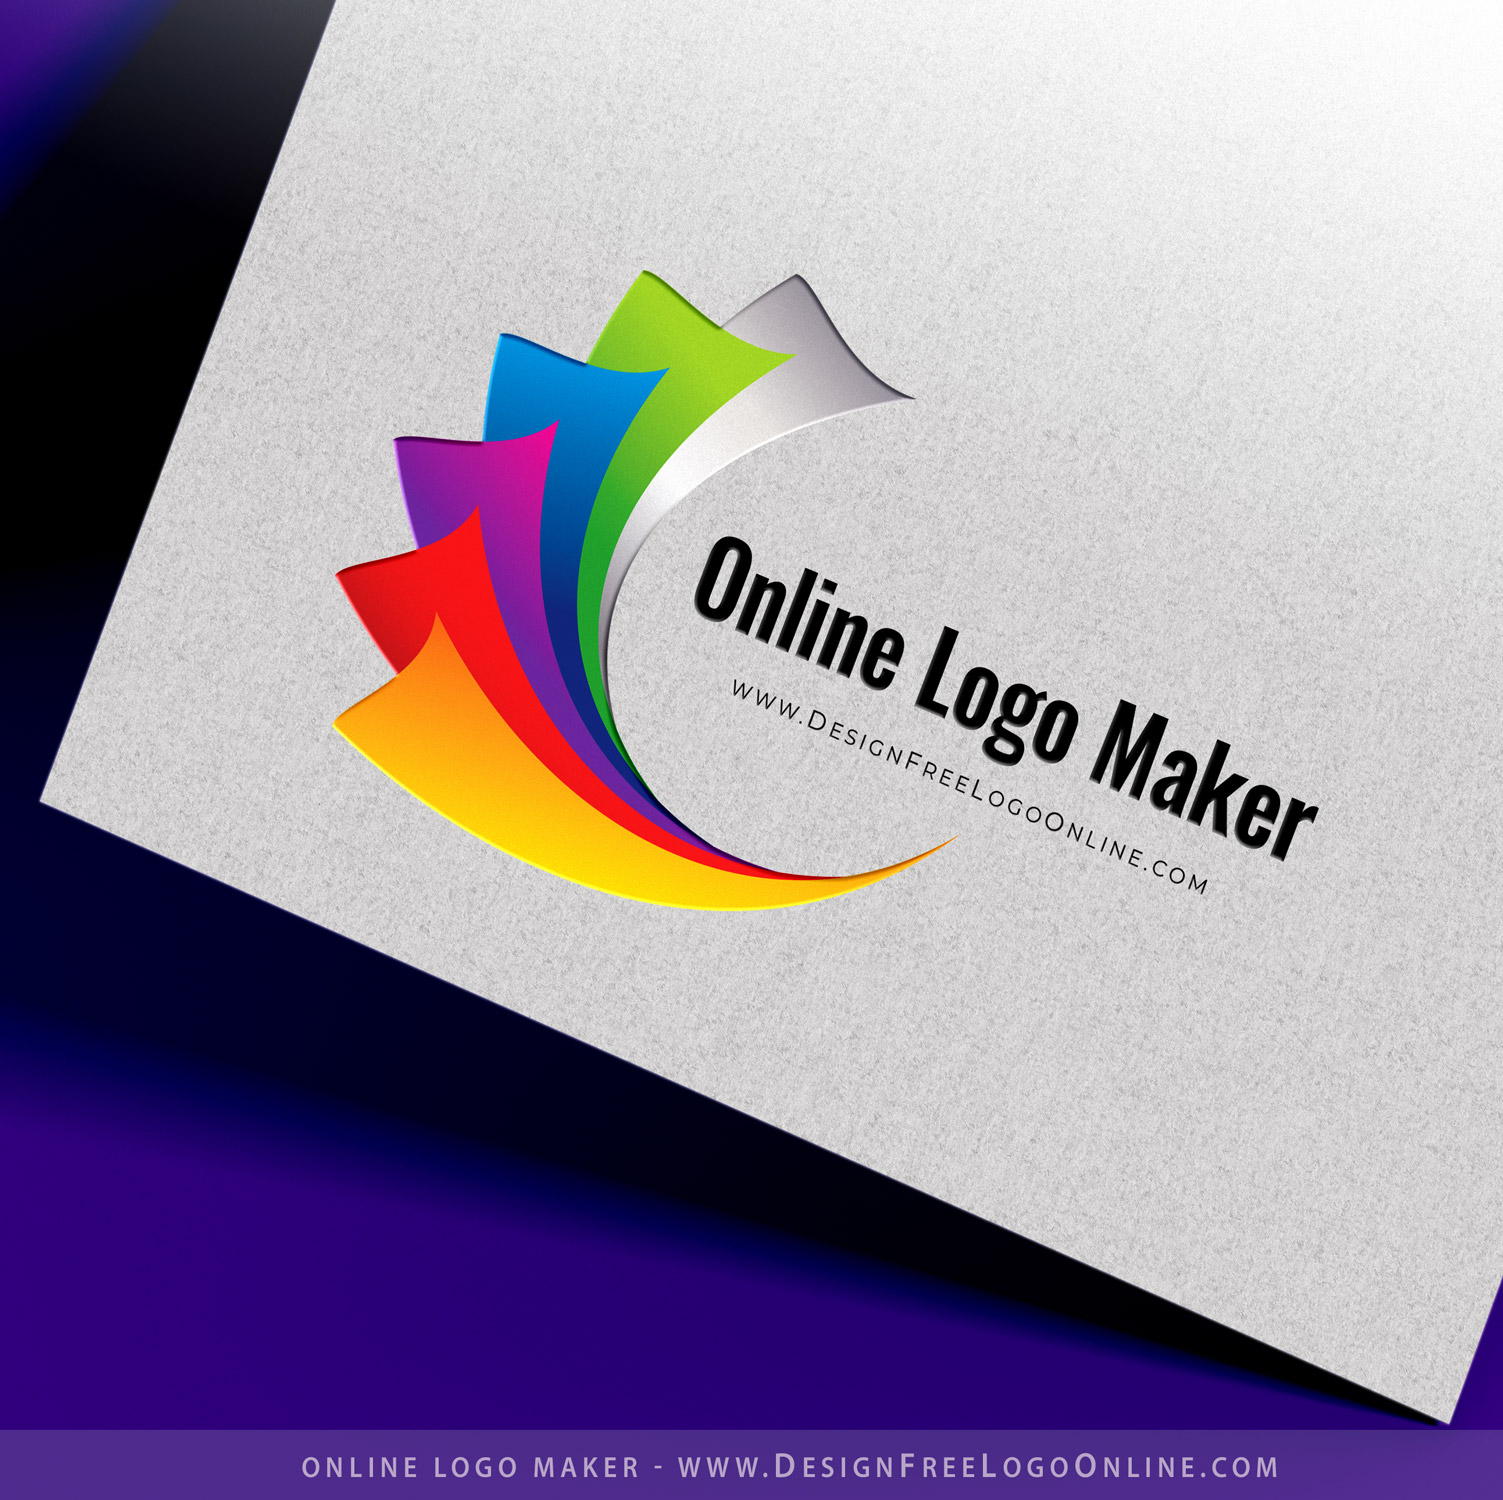 ONLINE LOGO MAKER - WWW.DESIGNFREELOGOONLINE.COM